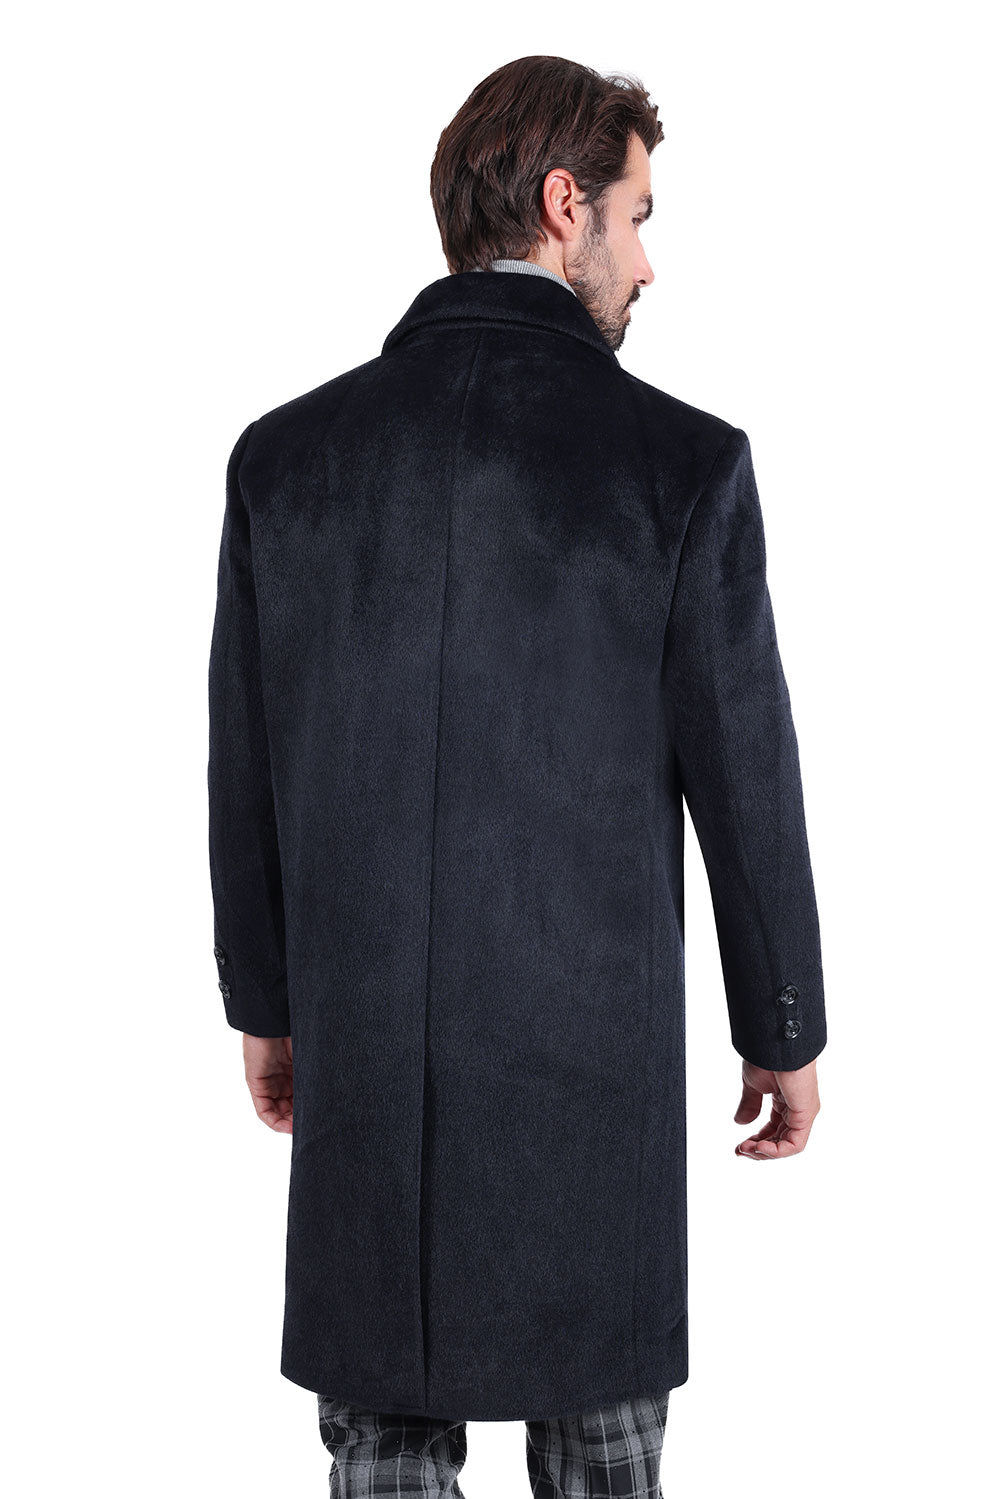 Barabas Men's Solid Color Luxury Collared Over Coat Jacket 2JLW04